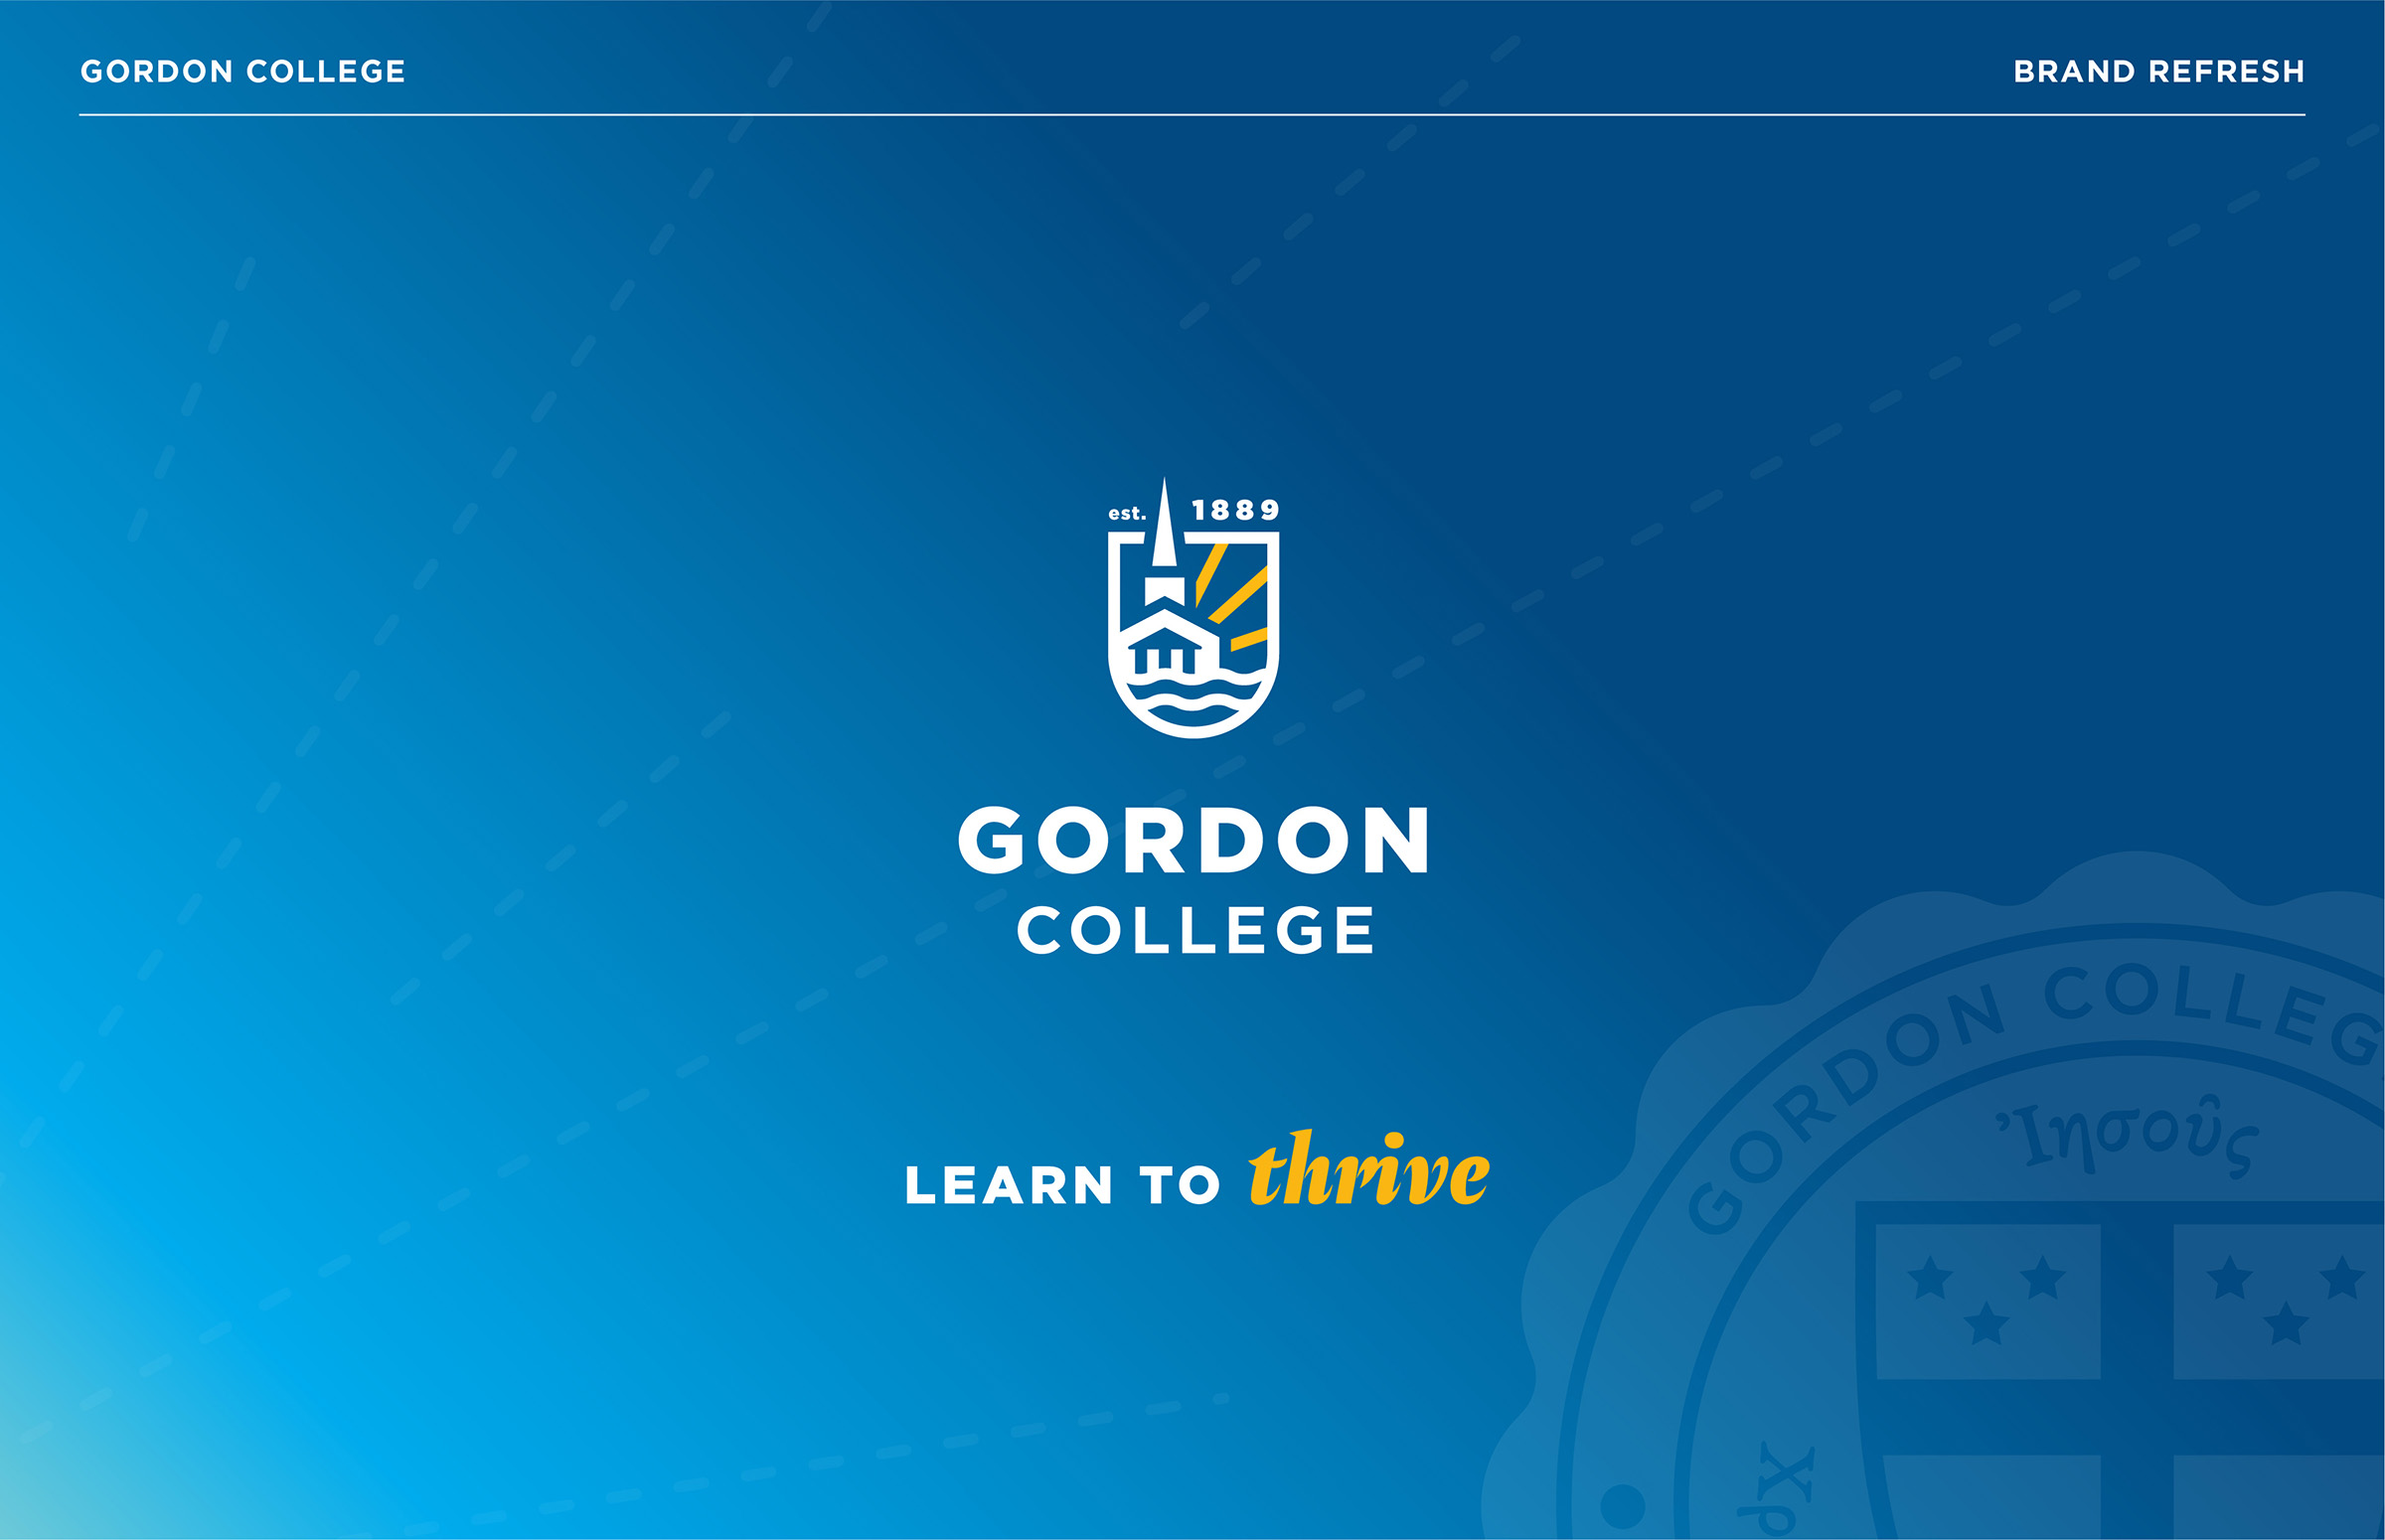 Gordon's new logo and tagline